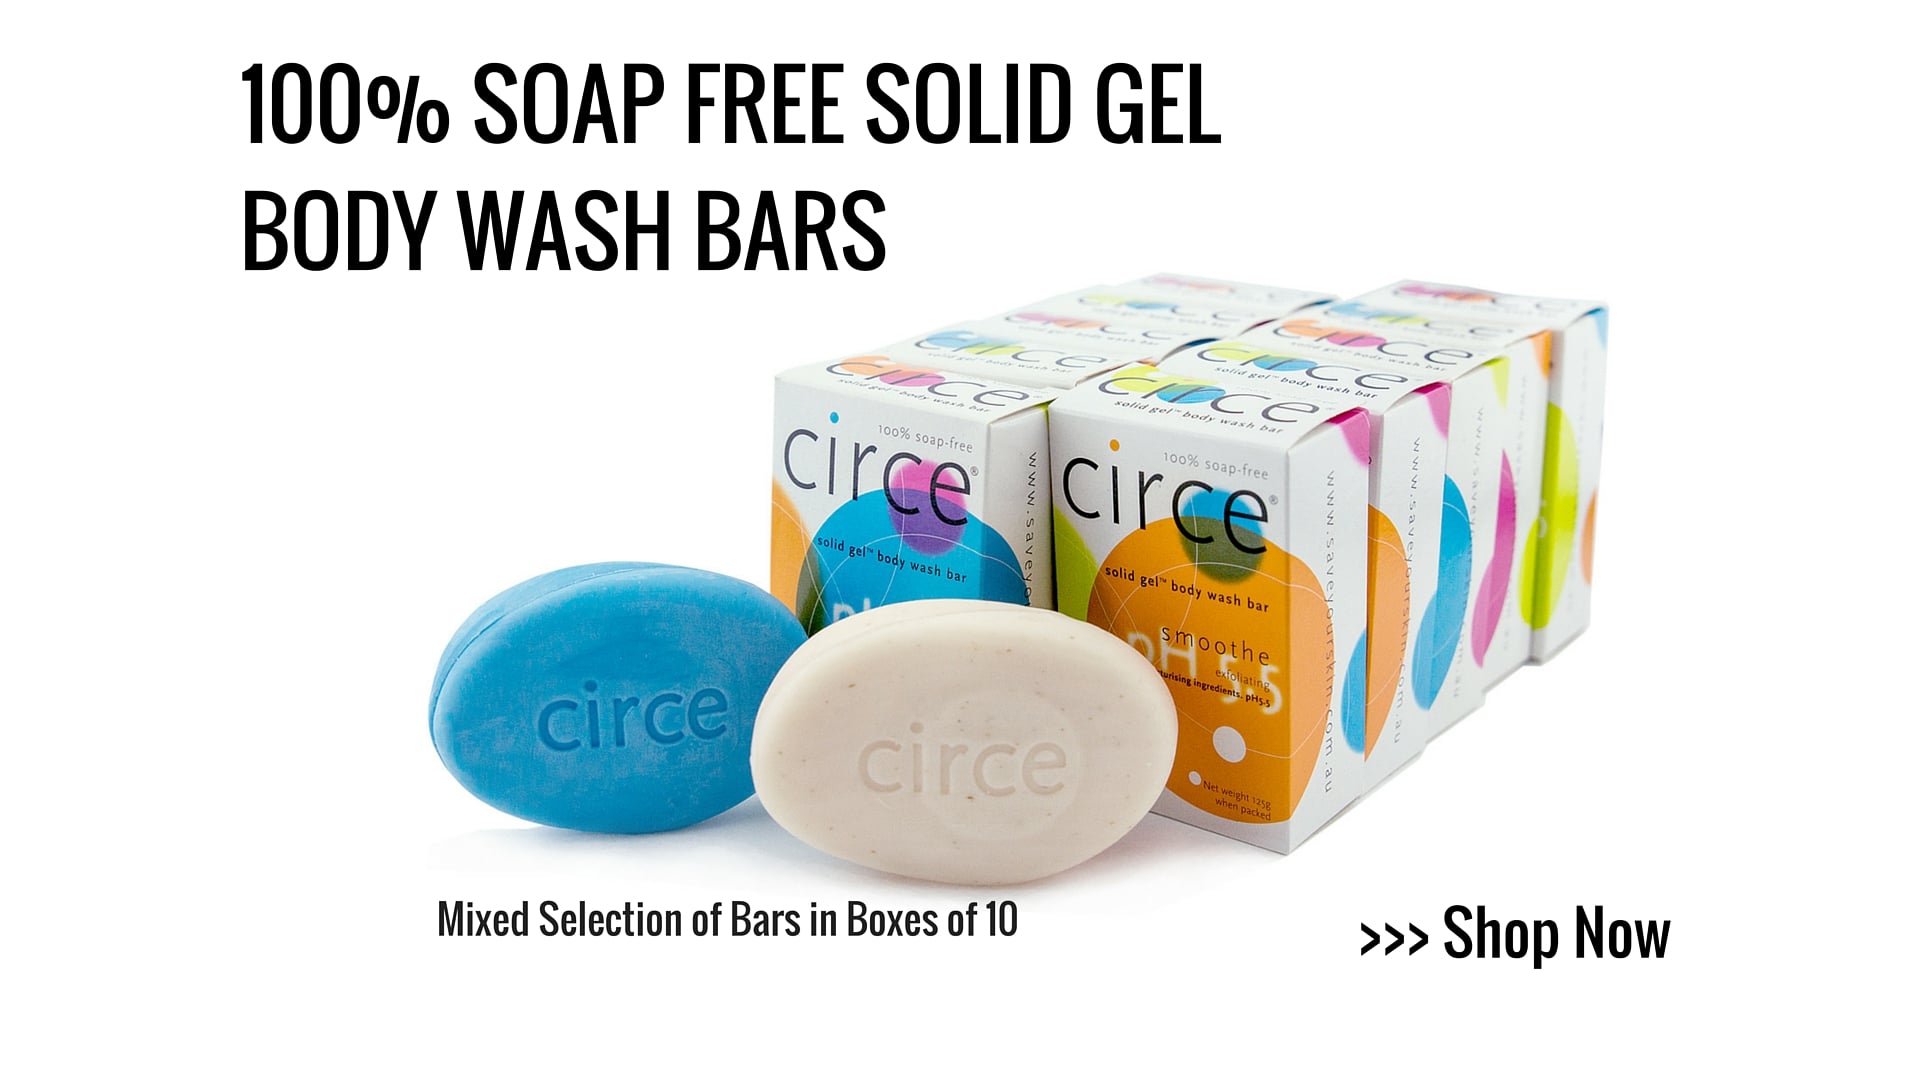 Circe 100% Soap Free Solid Gel Bar Packs boxes 10 - 1920 X 1080 (2).jpg